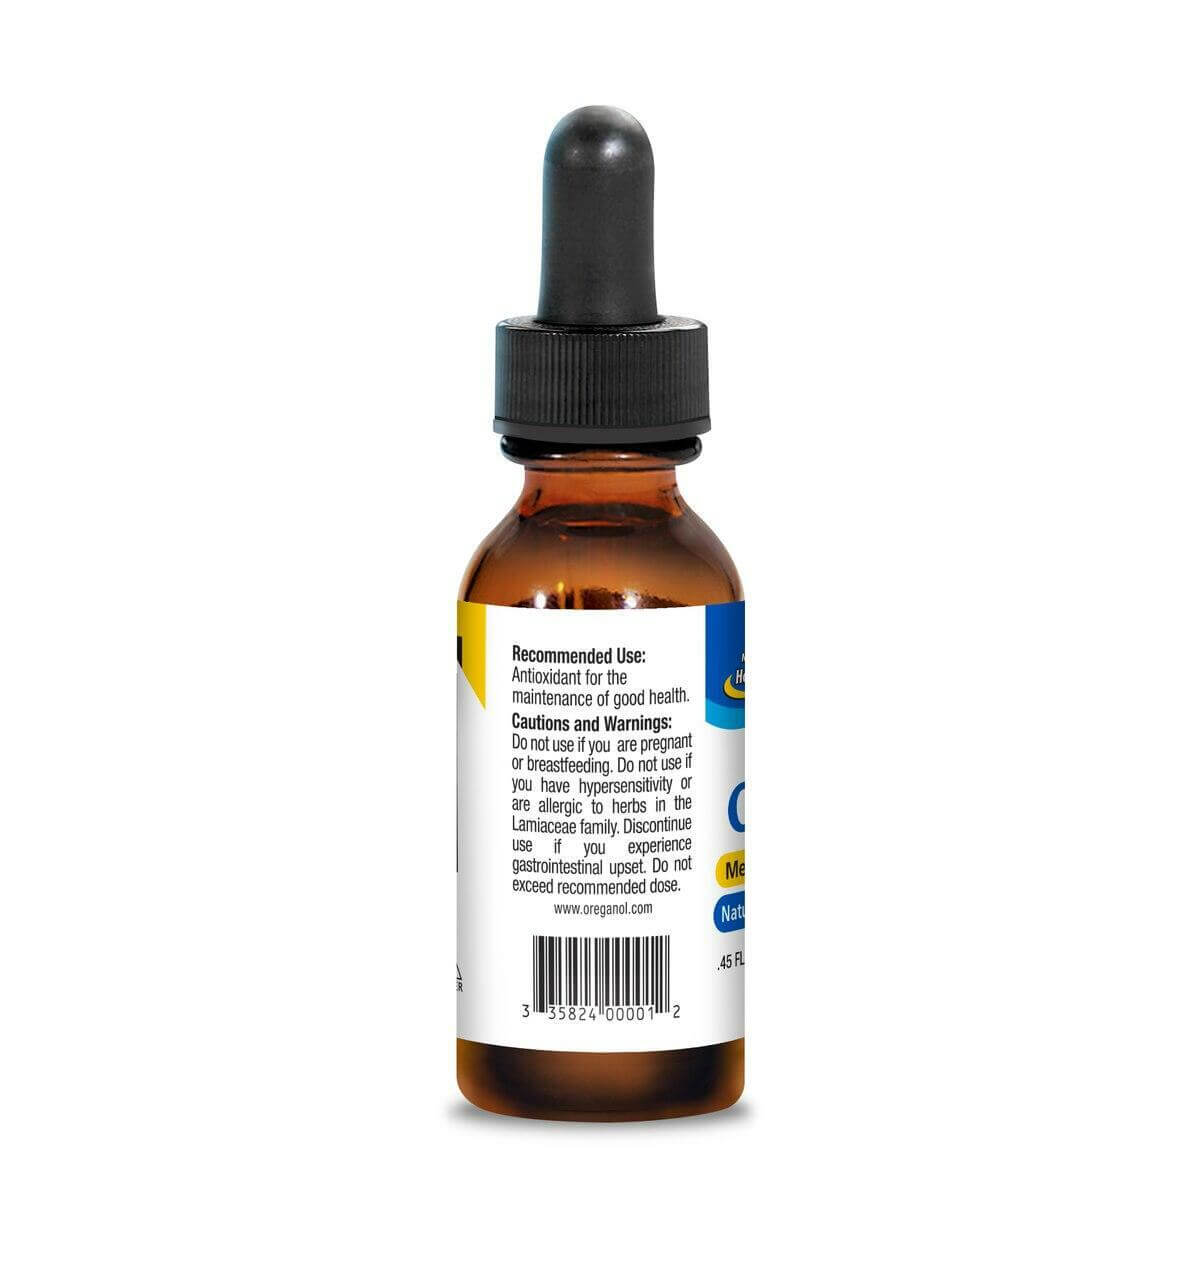 North American Herb & Spice Wild Oil of Oregano 13 ml - Nutrition Plus